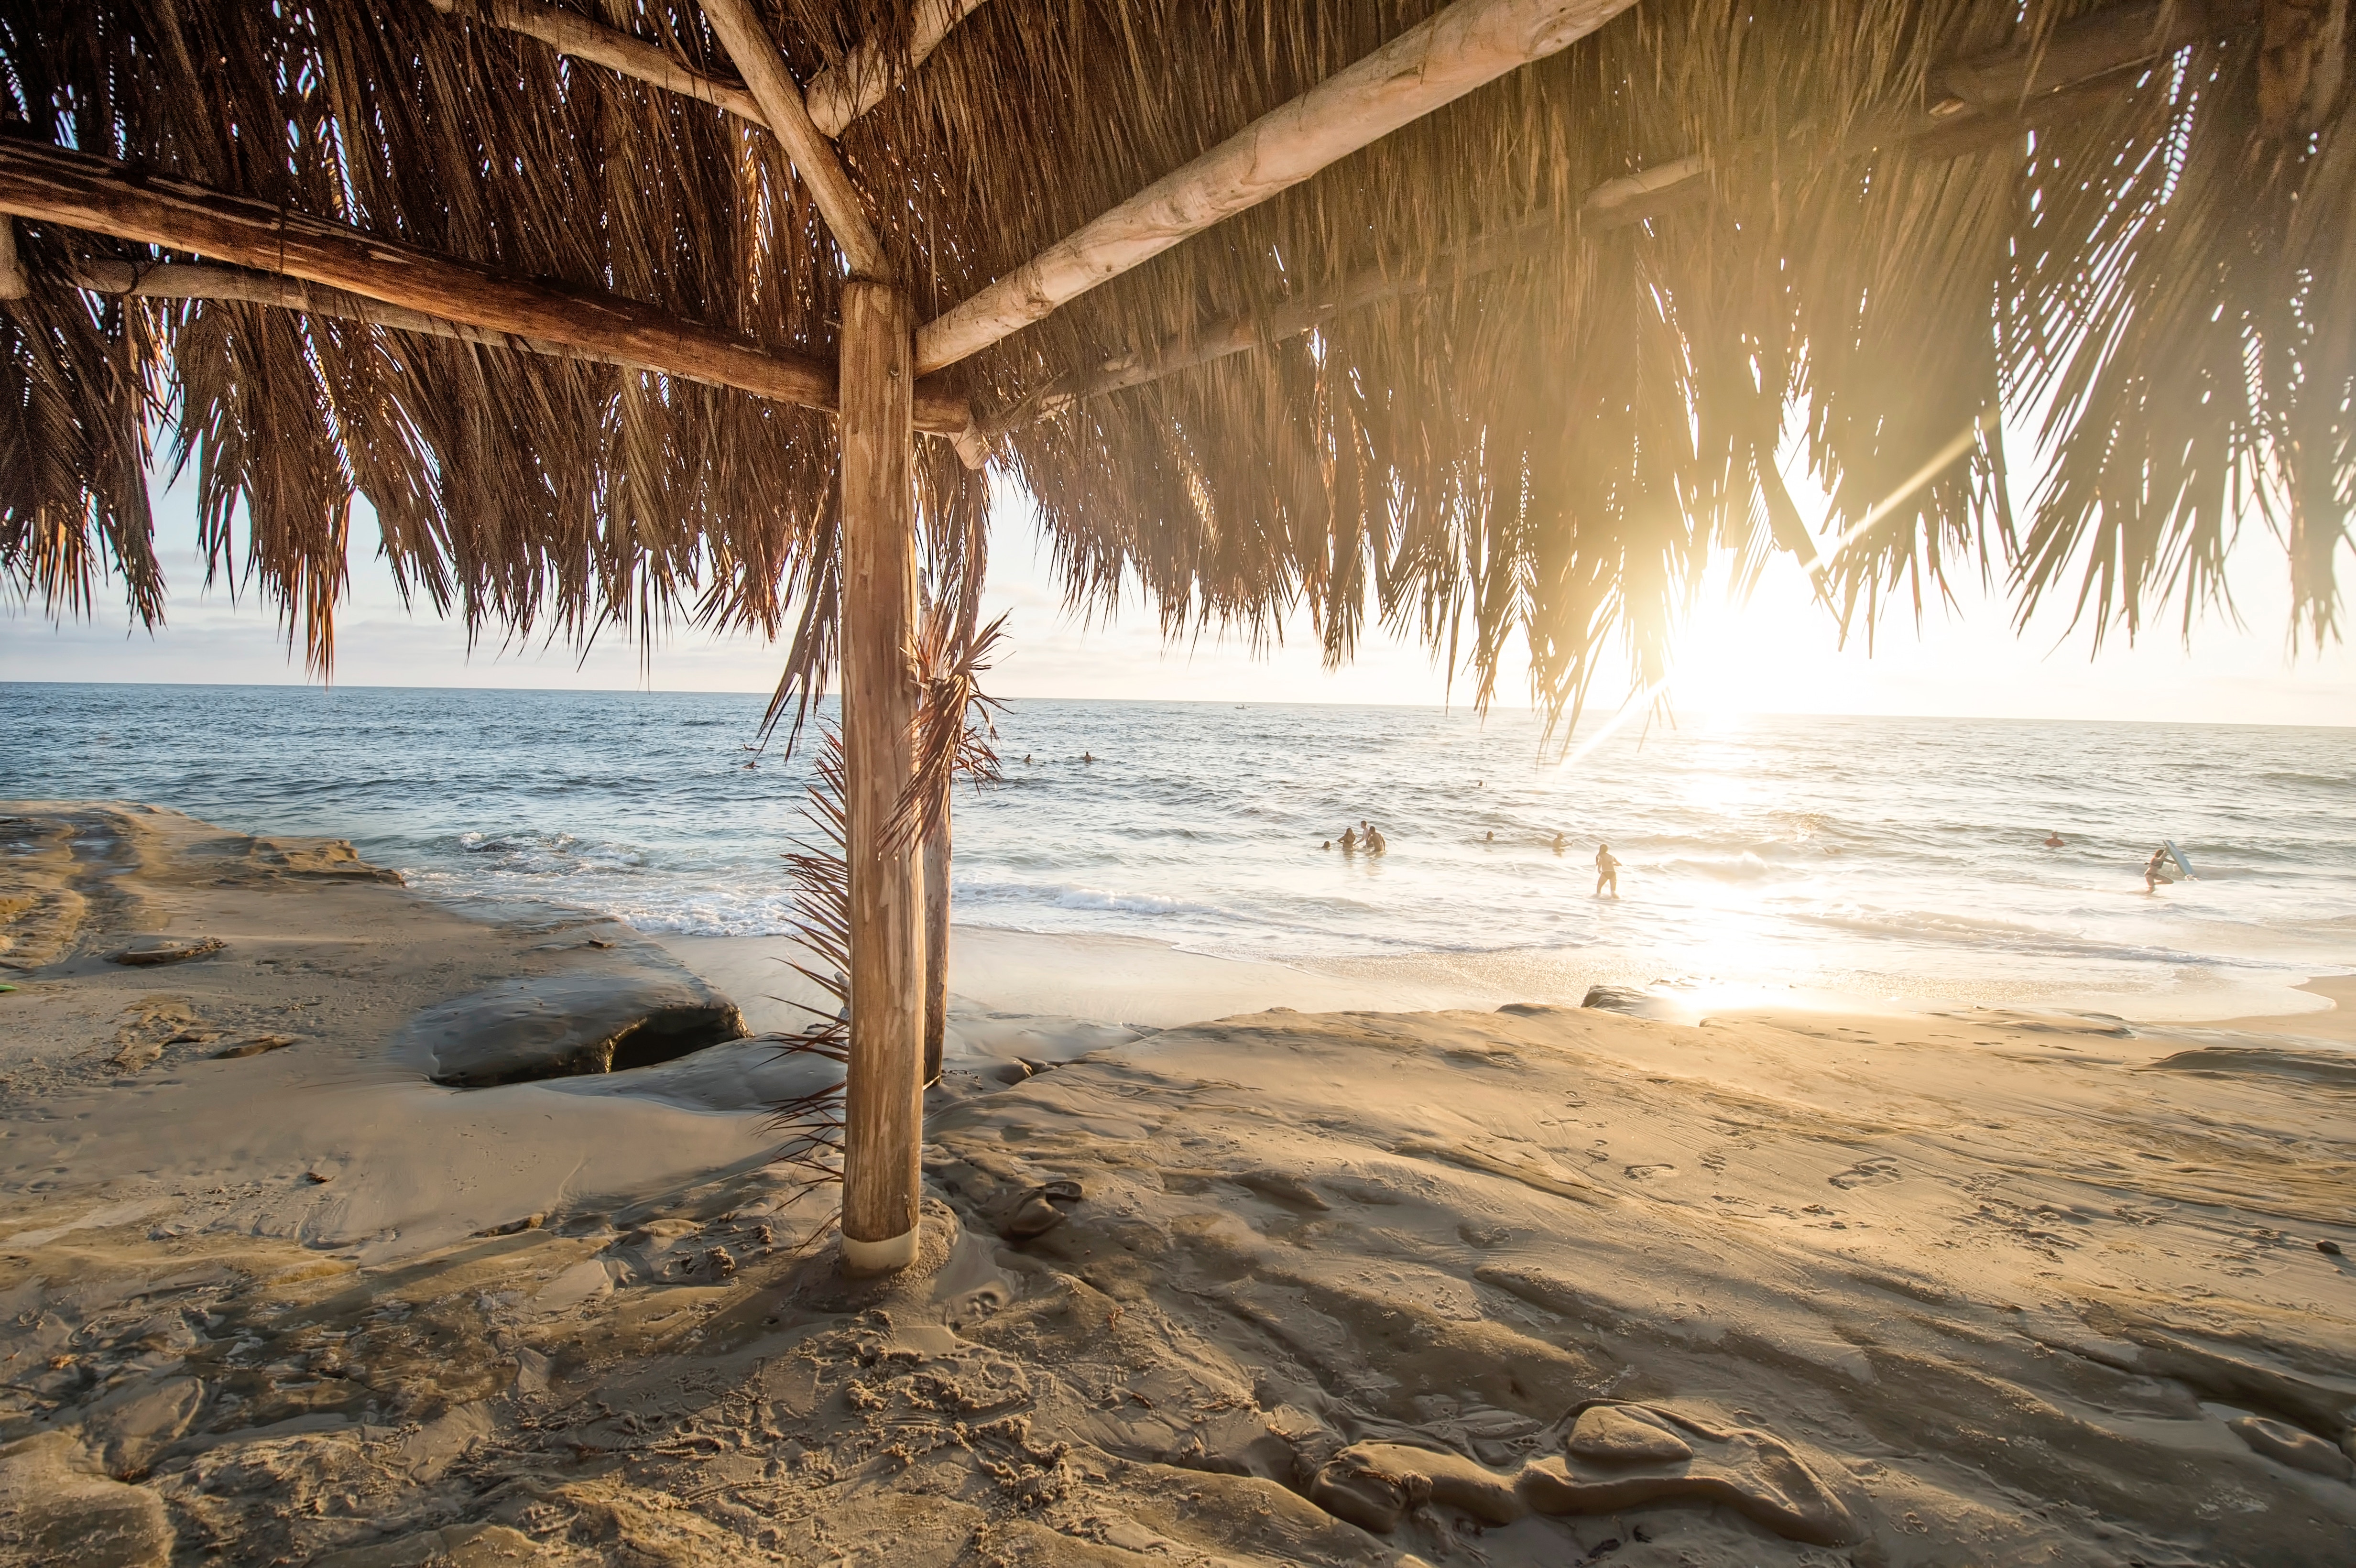 A-hut-is-framed-in-a-beach-scene